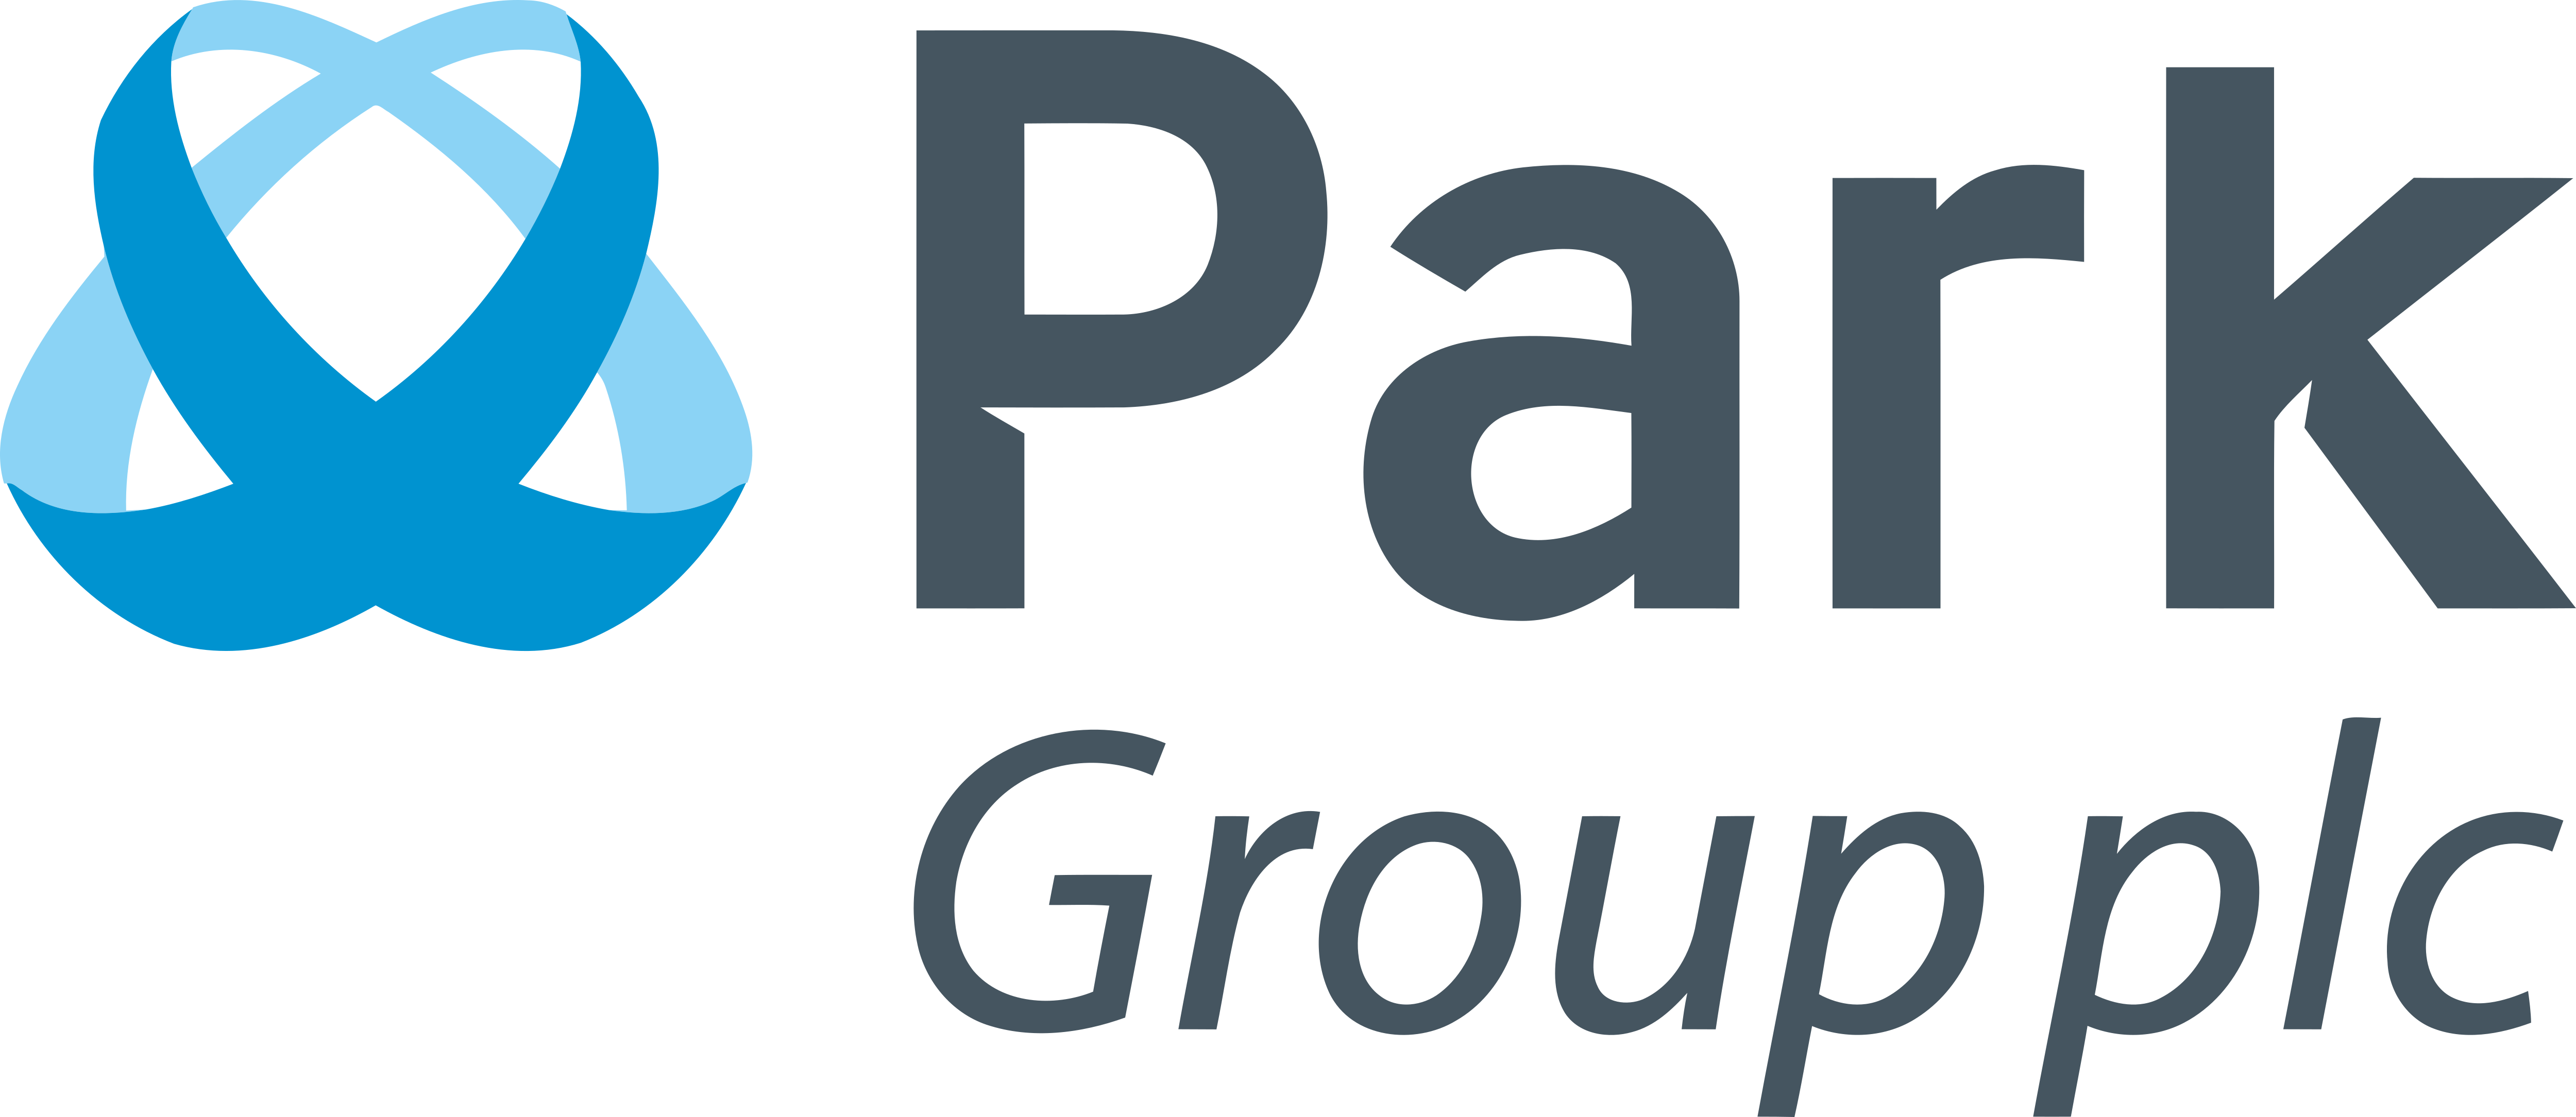 Park Group – Logos Download